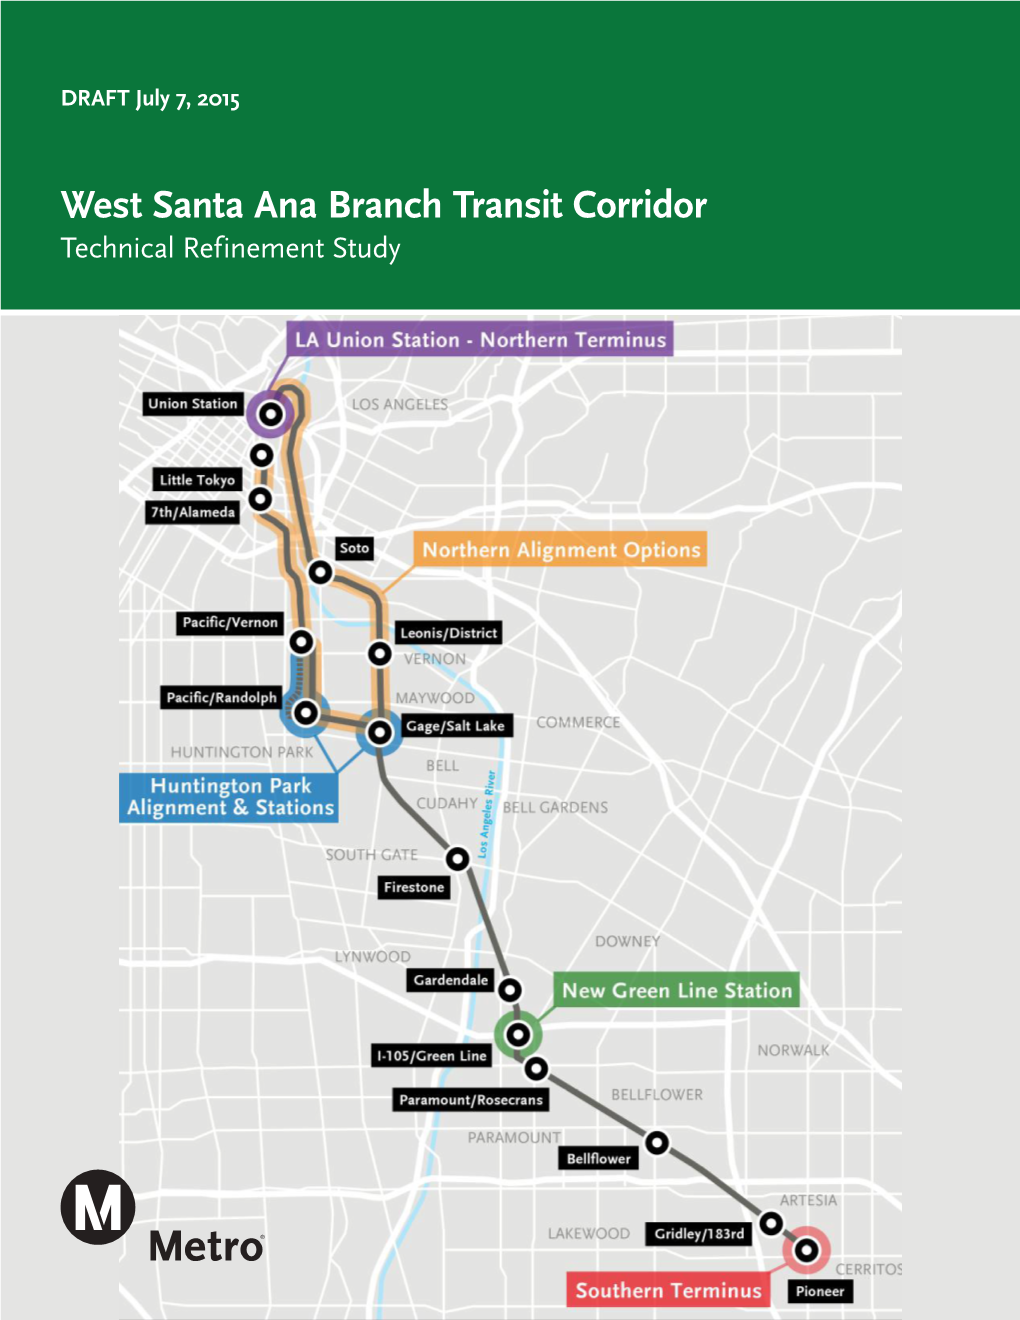 West Santa Ana Branch Transit Corridor Technical Refinement Study